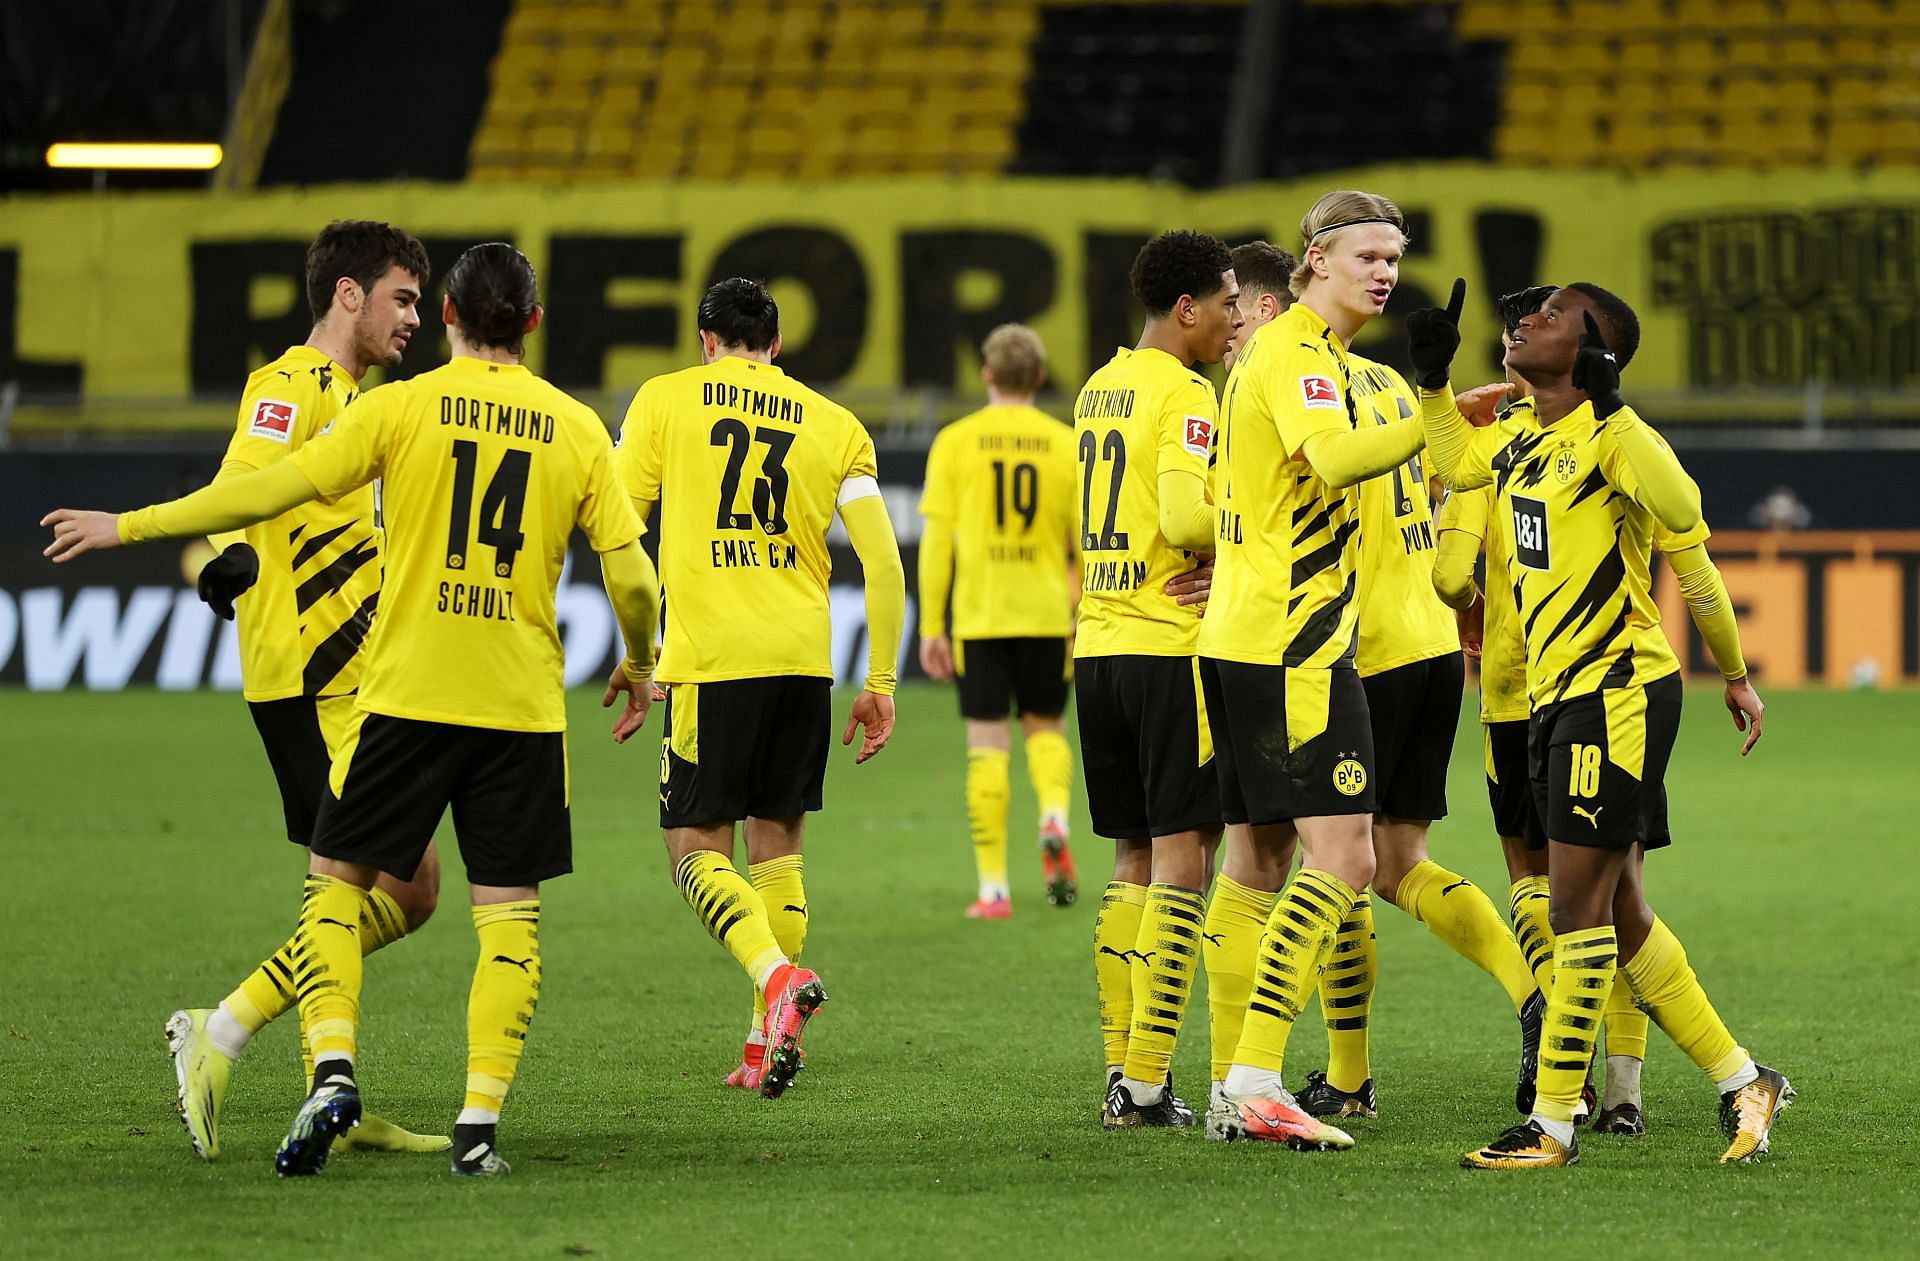 Borussia Dortmund take on Hertha Berlin this weekend